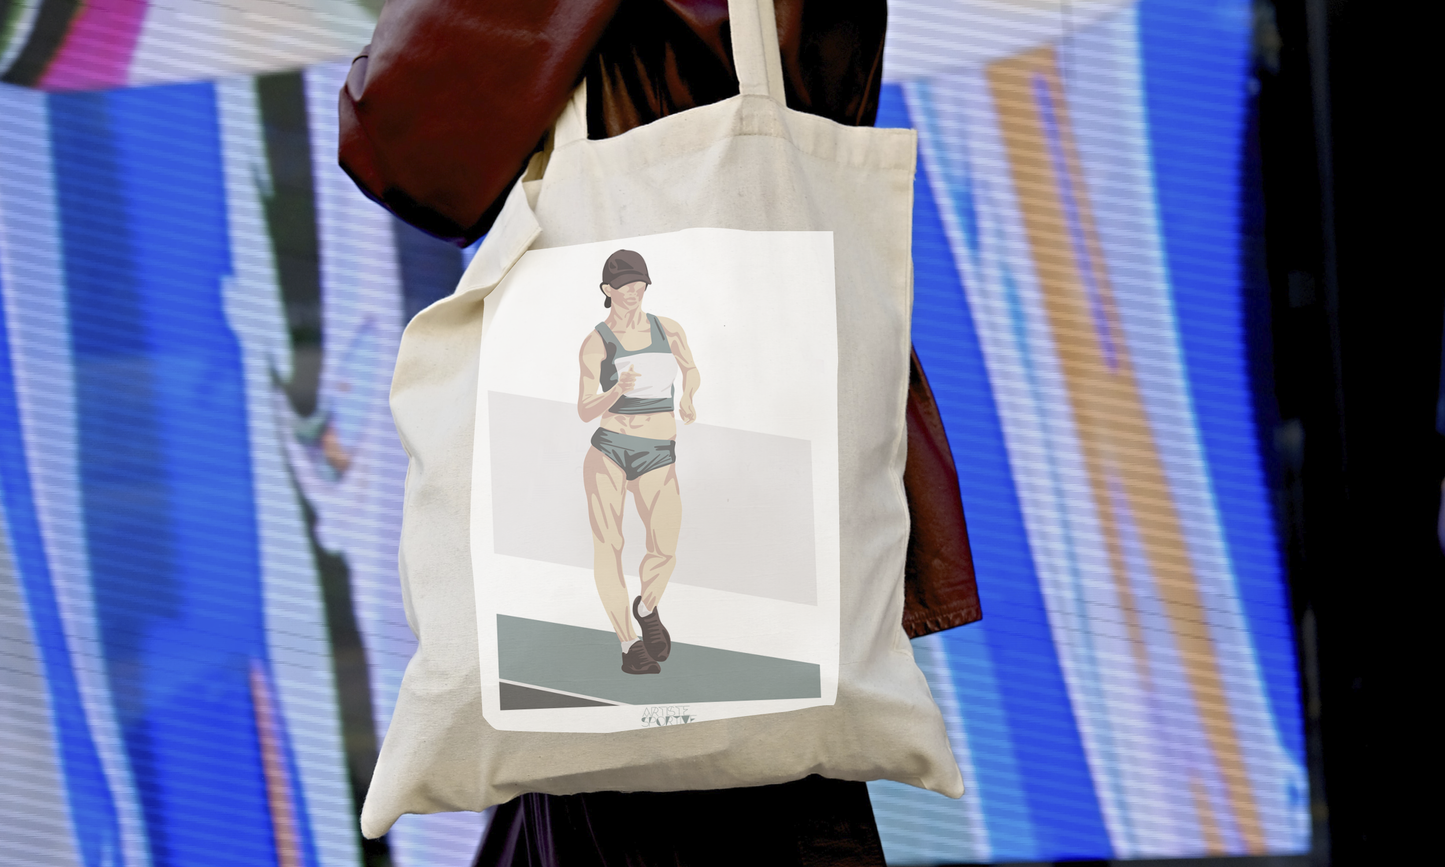 Tote bag ou sac athlétisme "Marche femme"